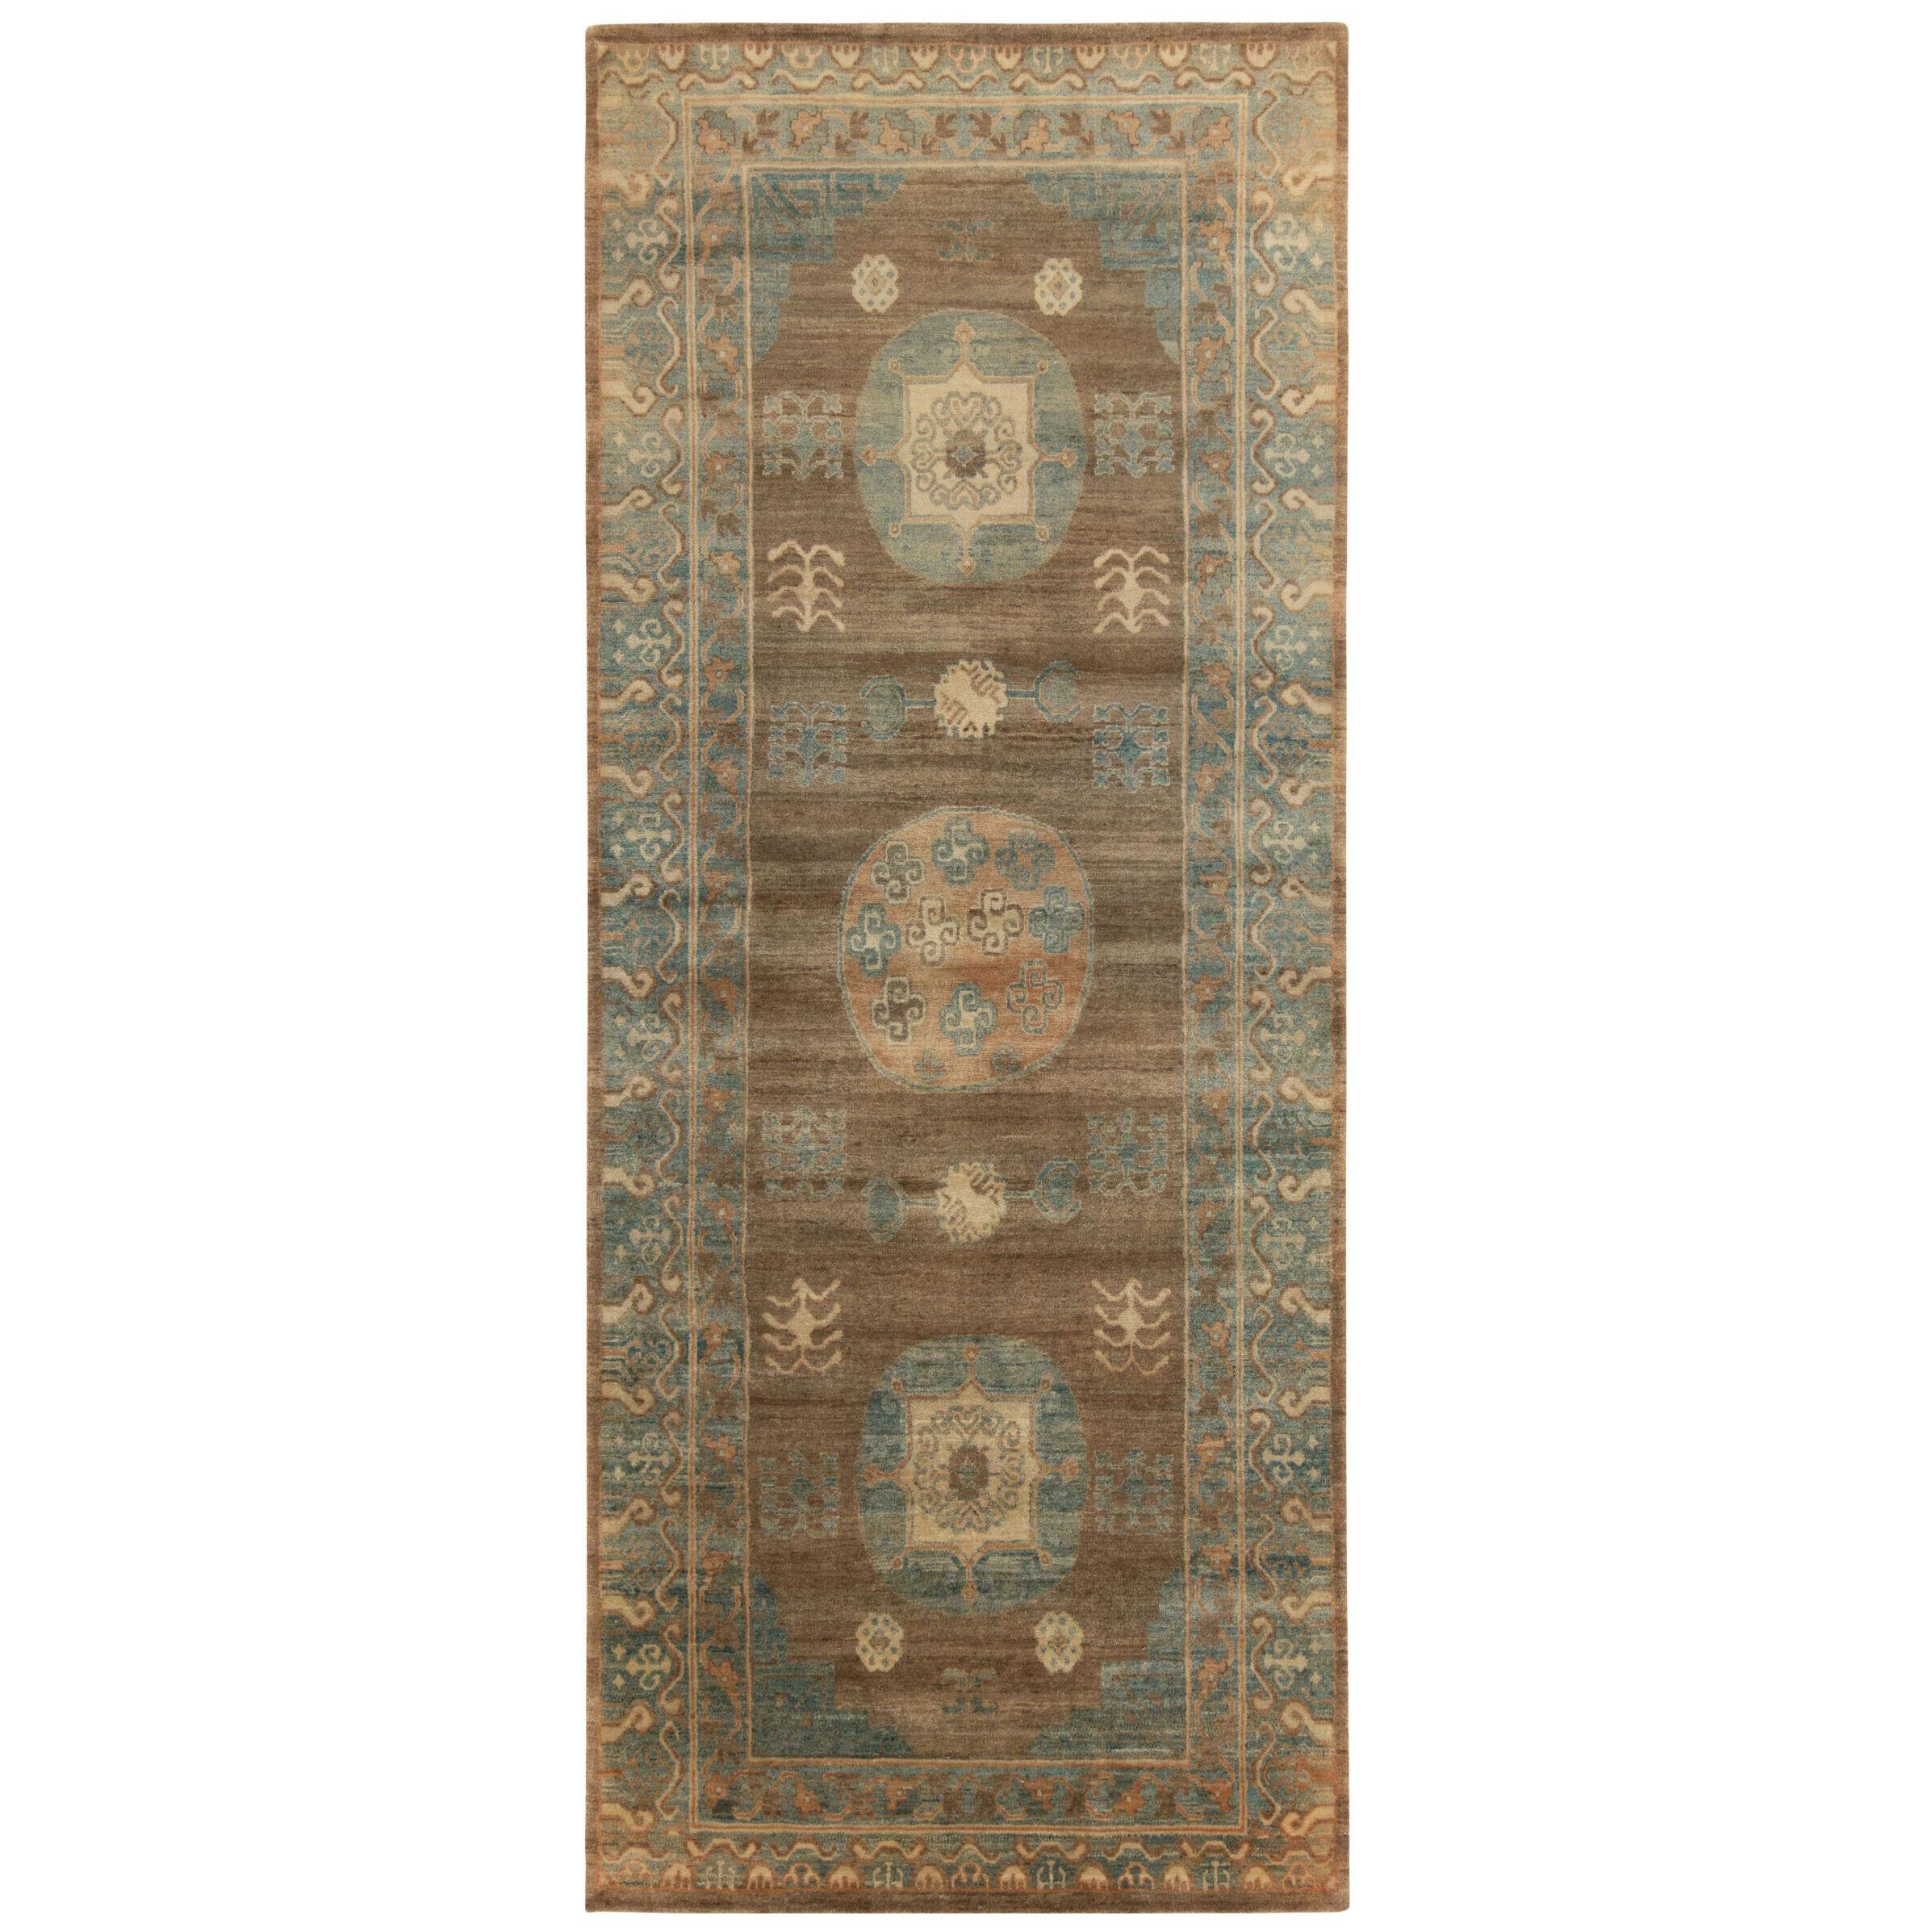 Rug & Kilim’s Khotan Samarkand Style Rug in Beige-Brown and Blue Medallion Style